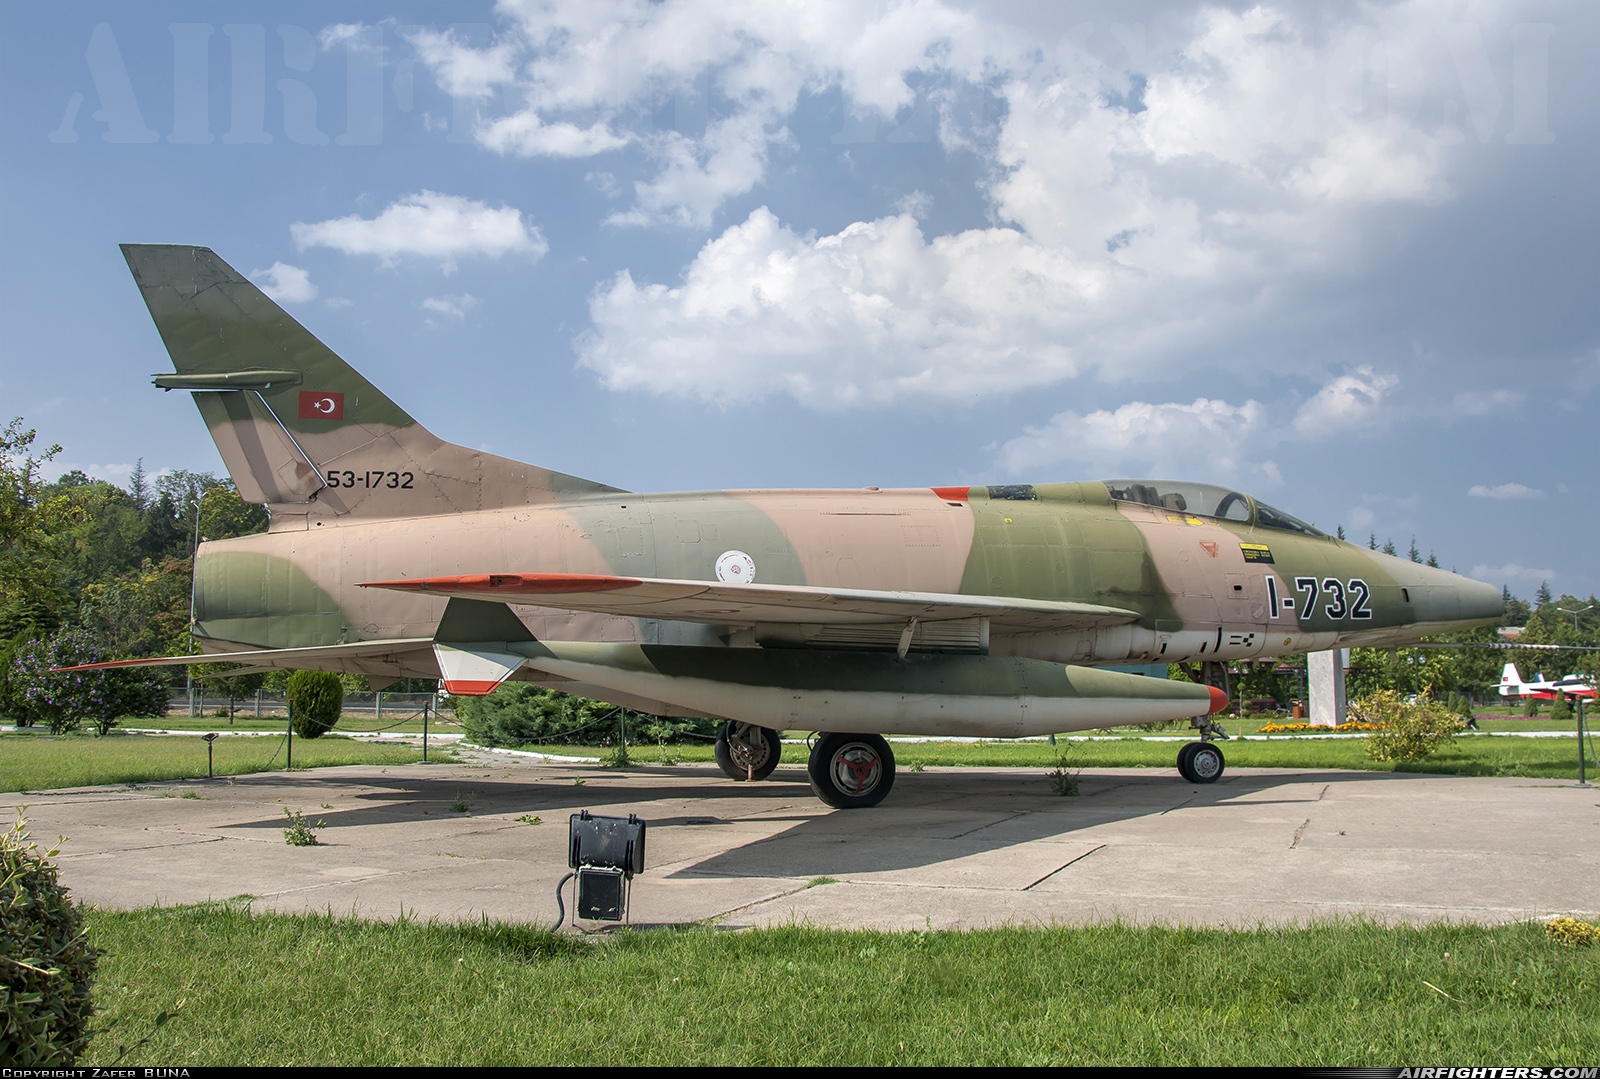 Türkiye - Air Force North American F-100C Super Sabre 53-1732 at Off-Airport - Eskisehir Aviation Museum, Türkiye